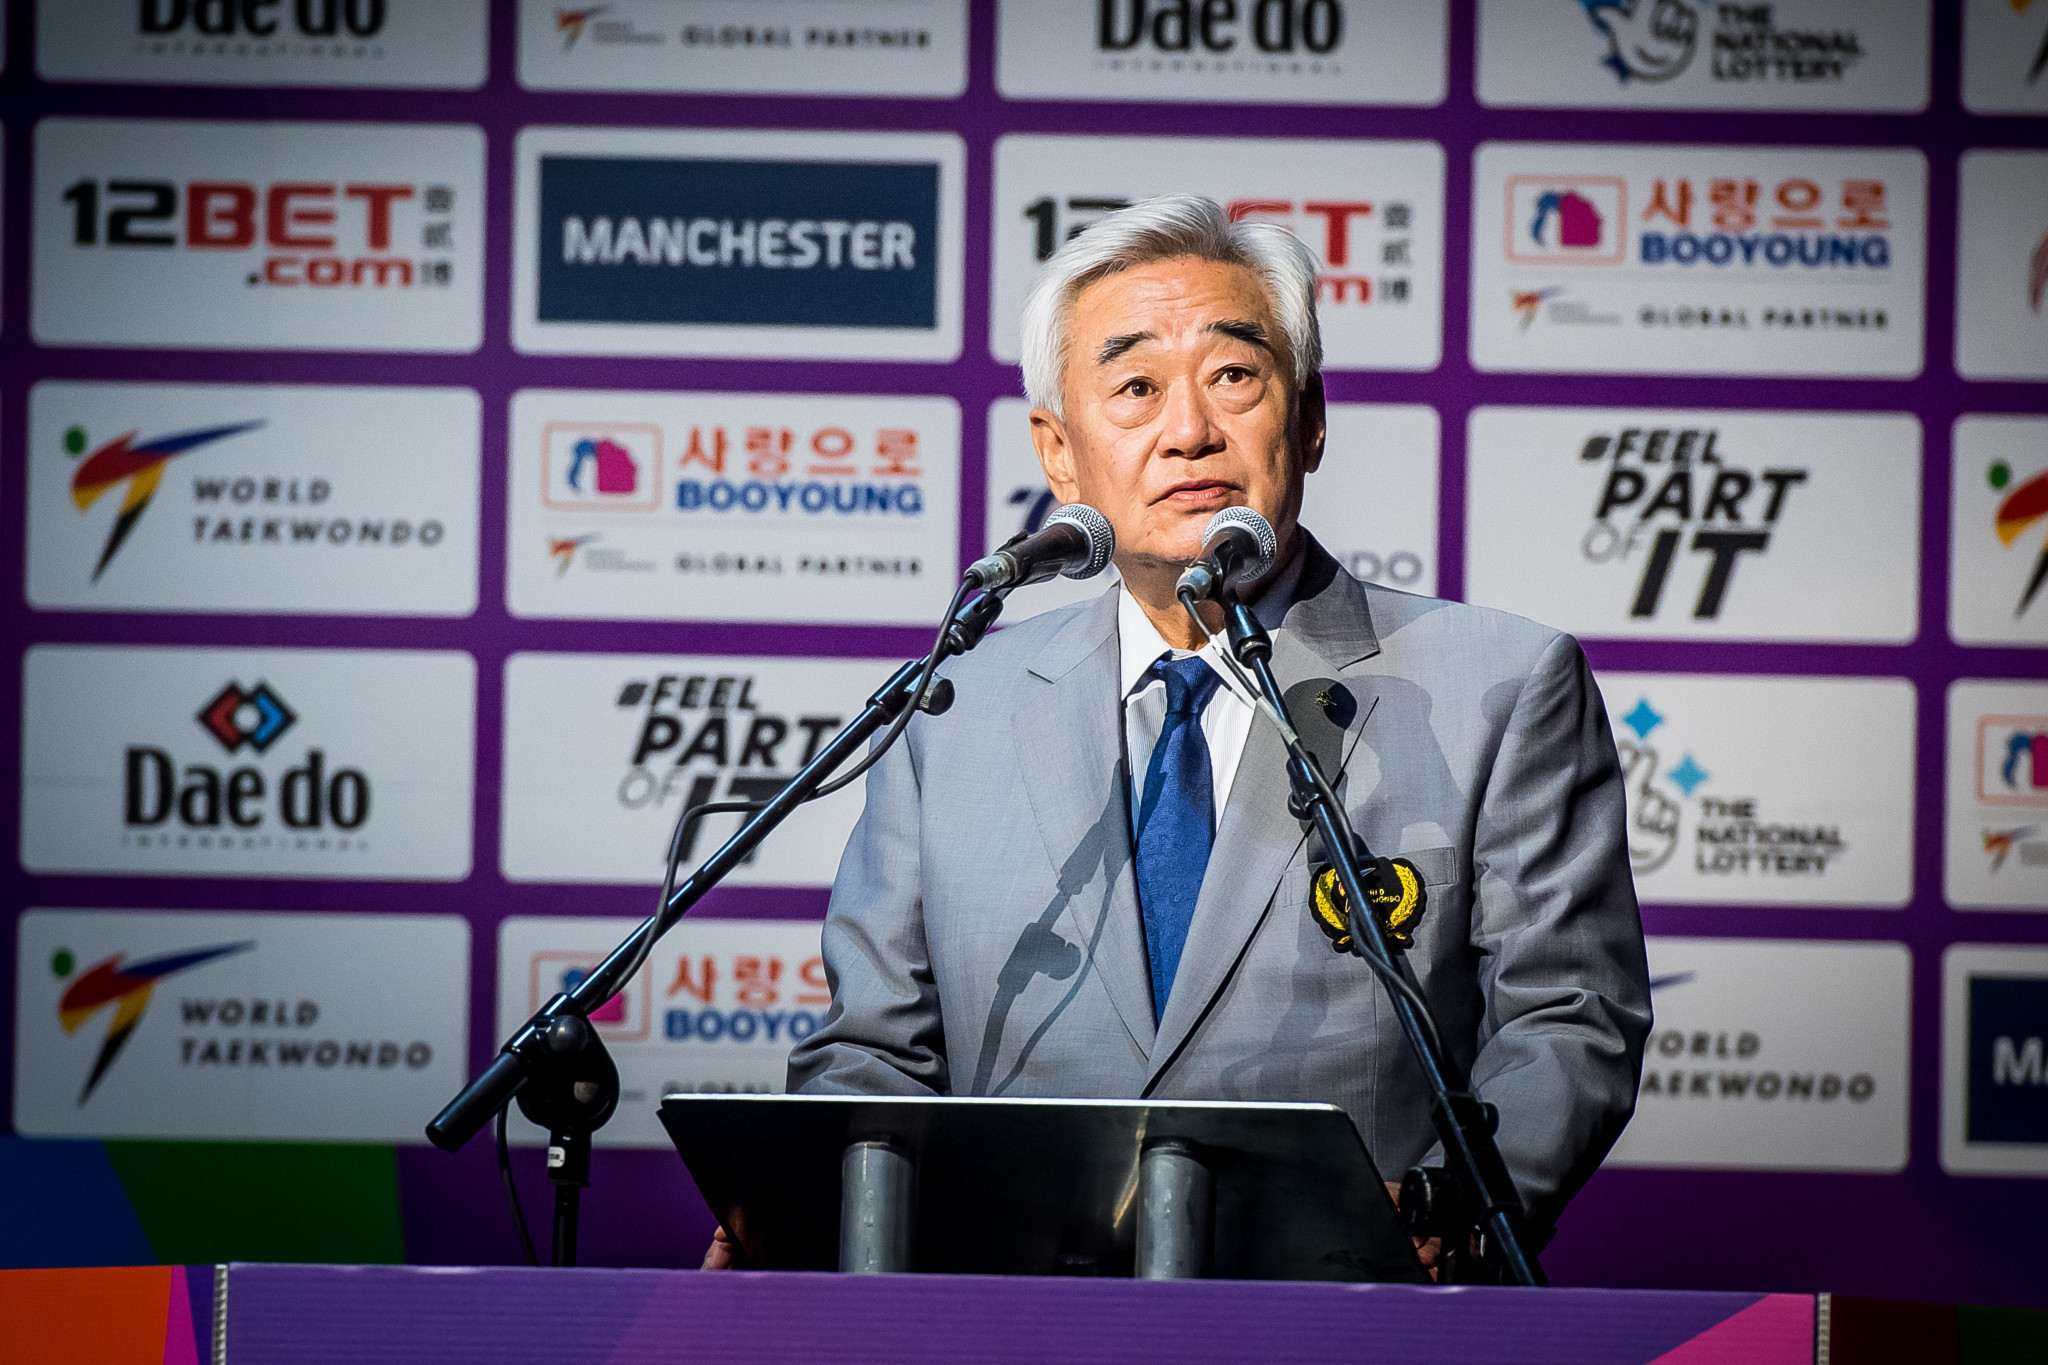 World Taekwondo President Choue Chung-won said the World Championships would smooth out "malfunctions" for Tokyo 2020 ©World Taekwondo